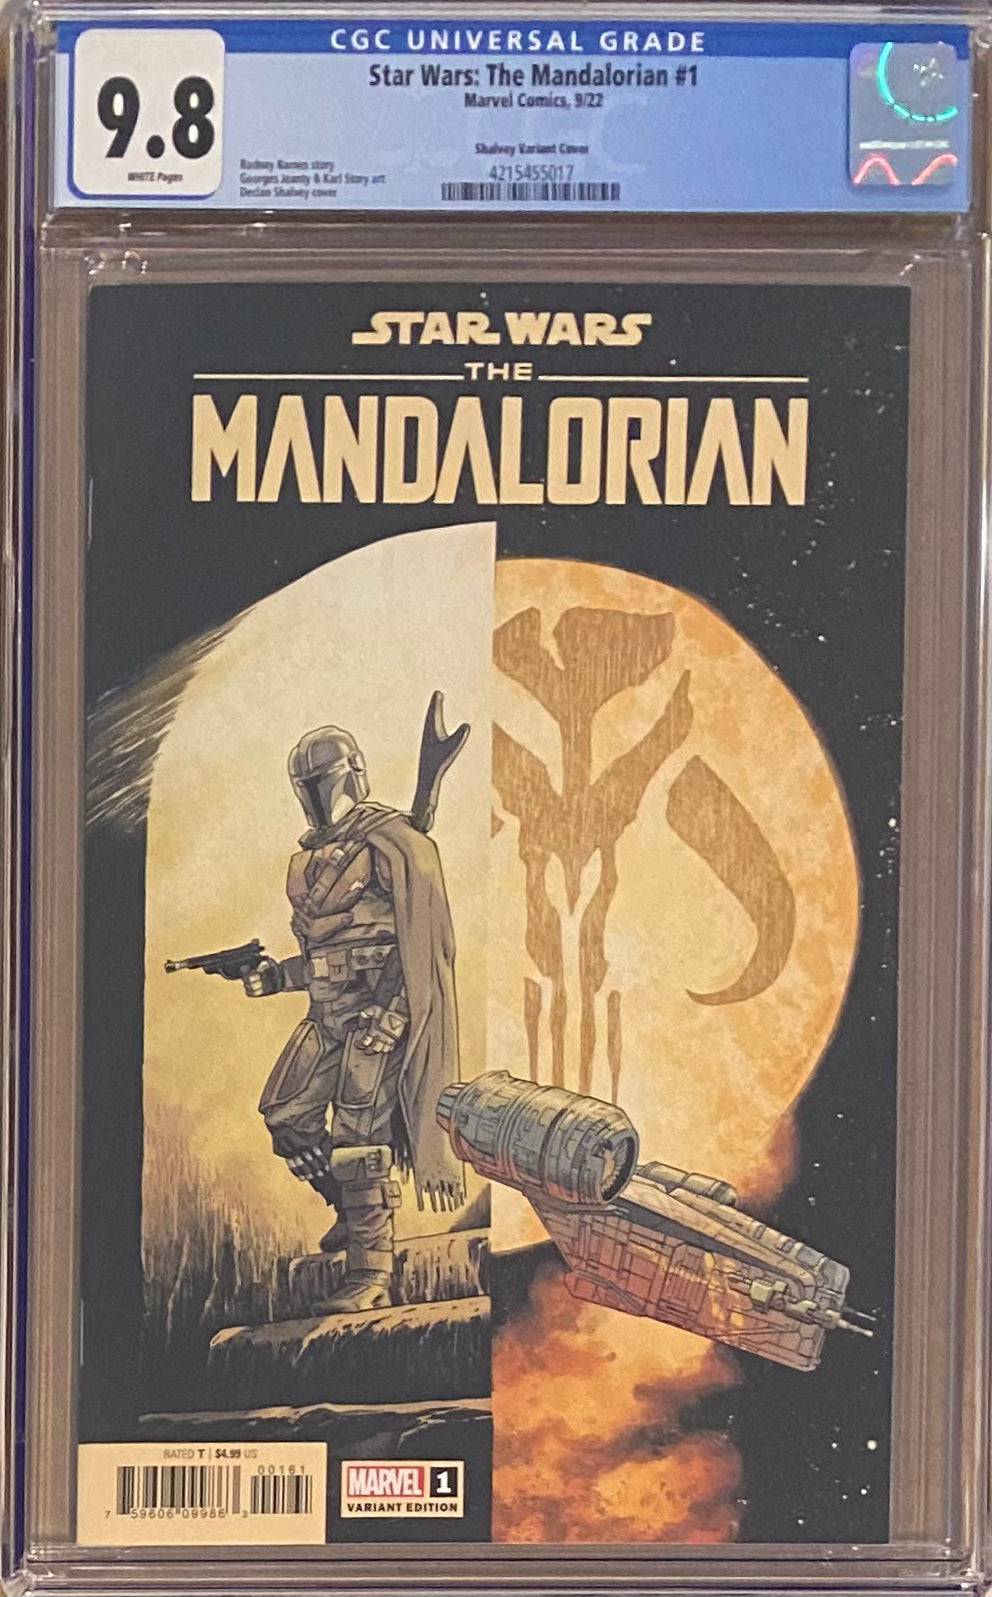 Star Wars: The Mandalorian #1 Shalvey Variant CGC 9.8